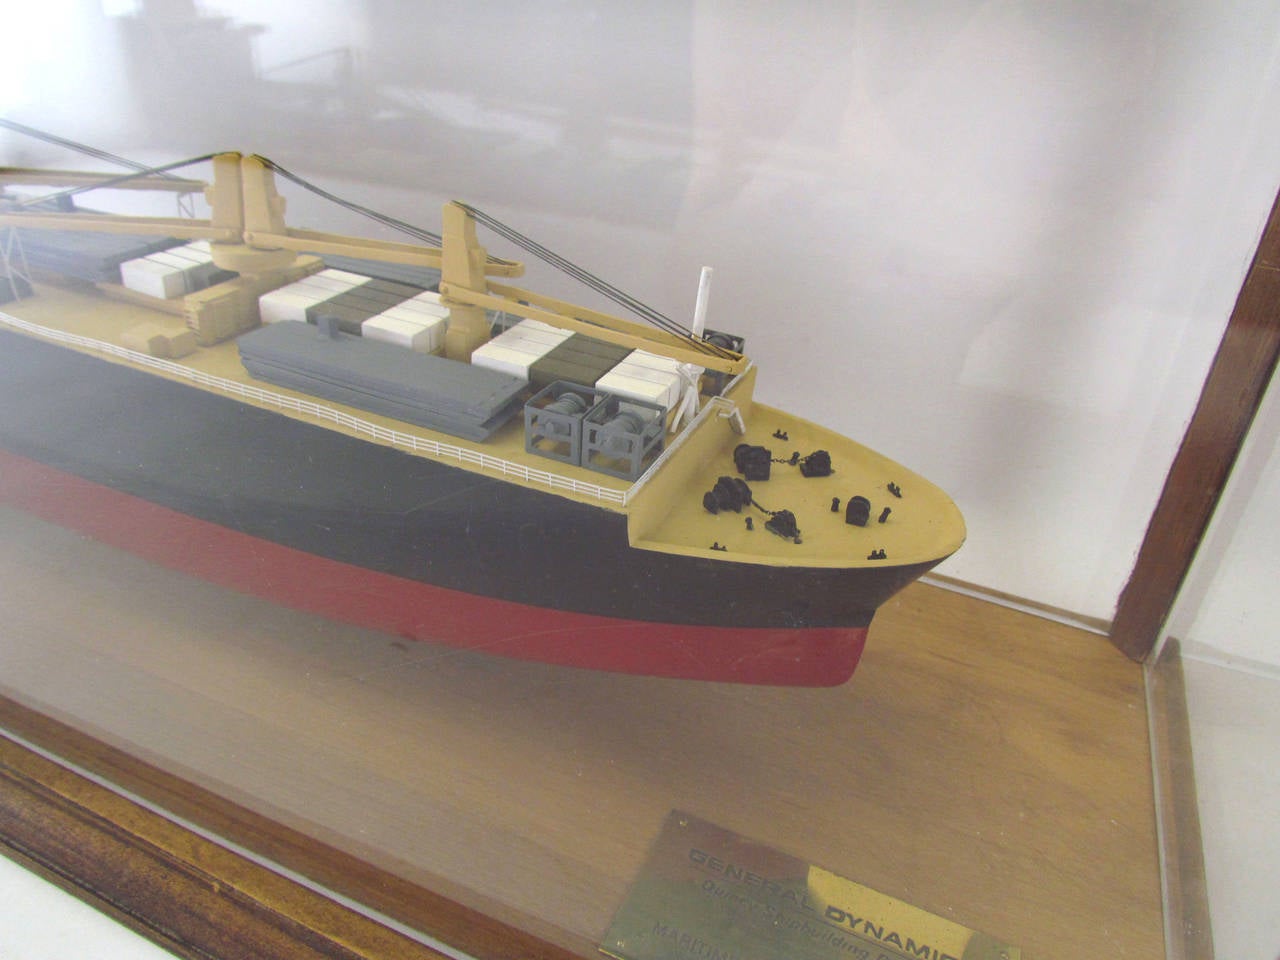 Plastic Executive Presentation Military Ship Model in Display Case, circa 1980s